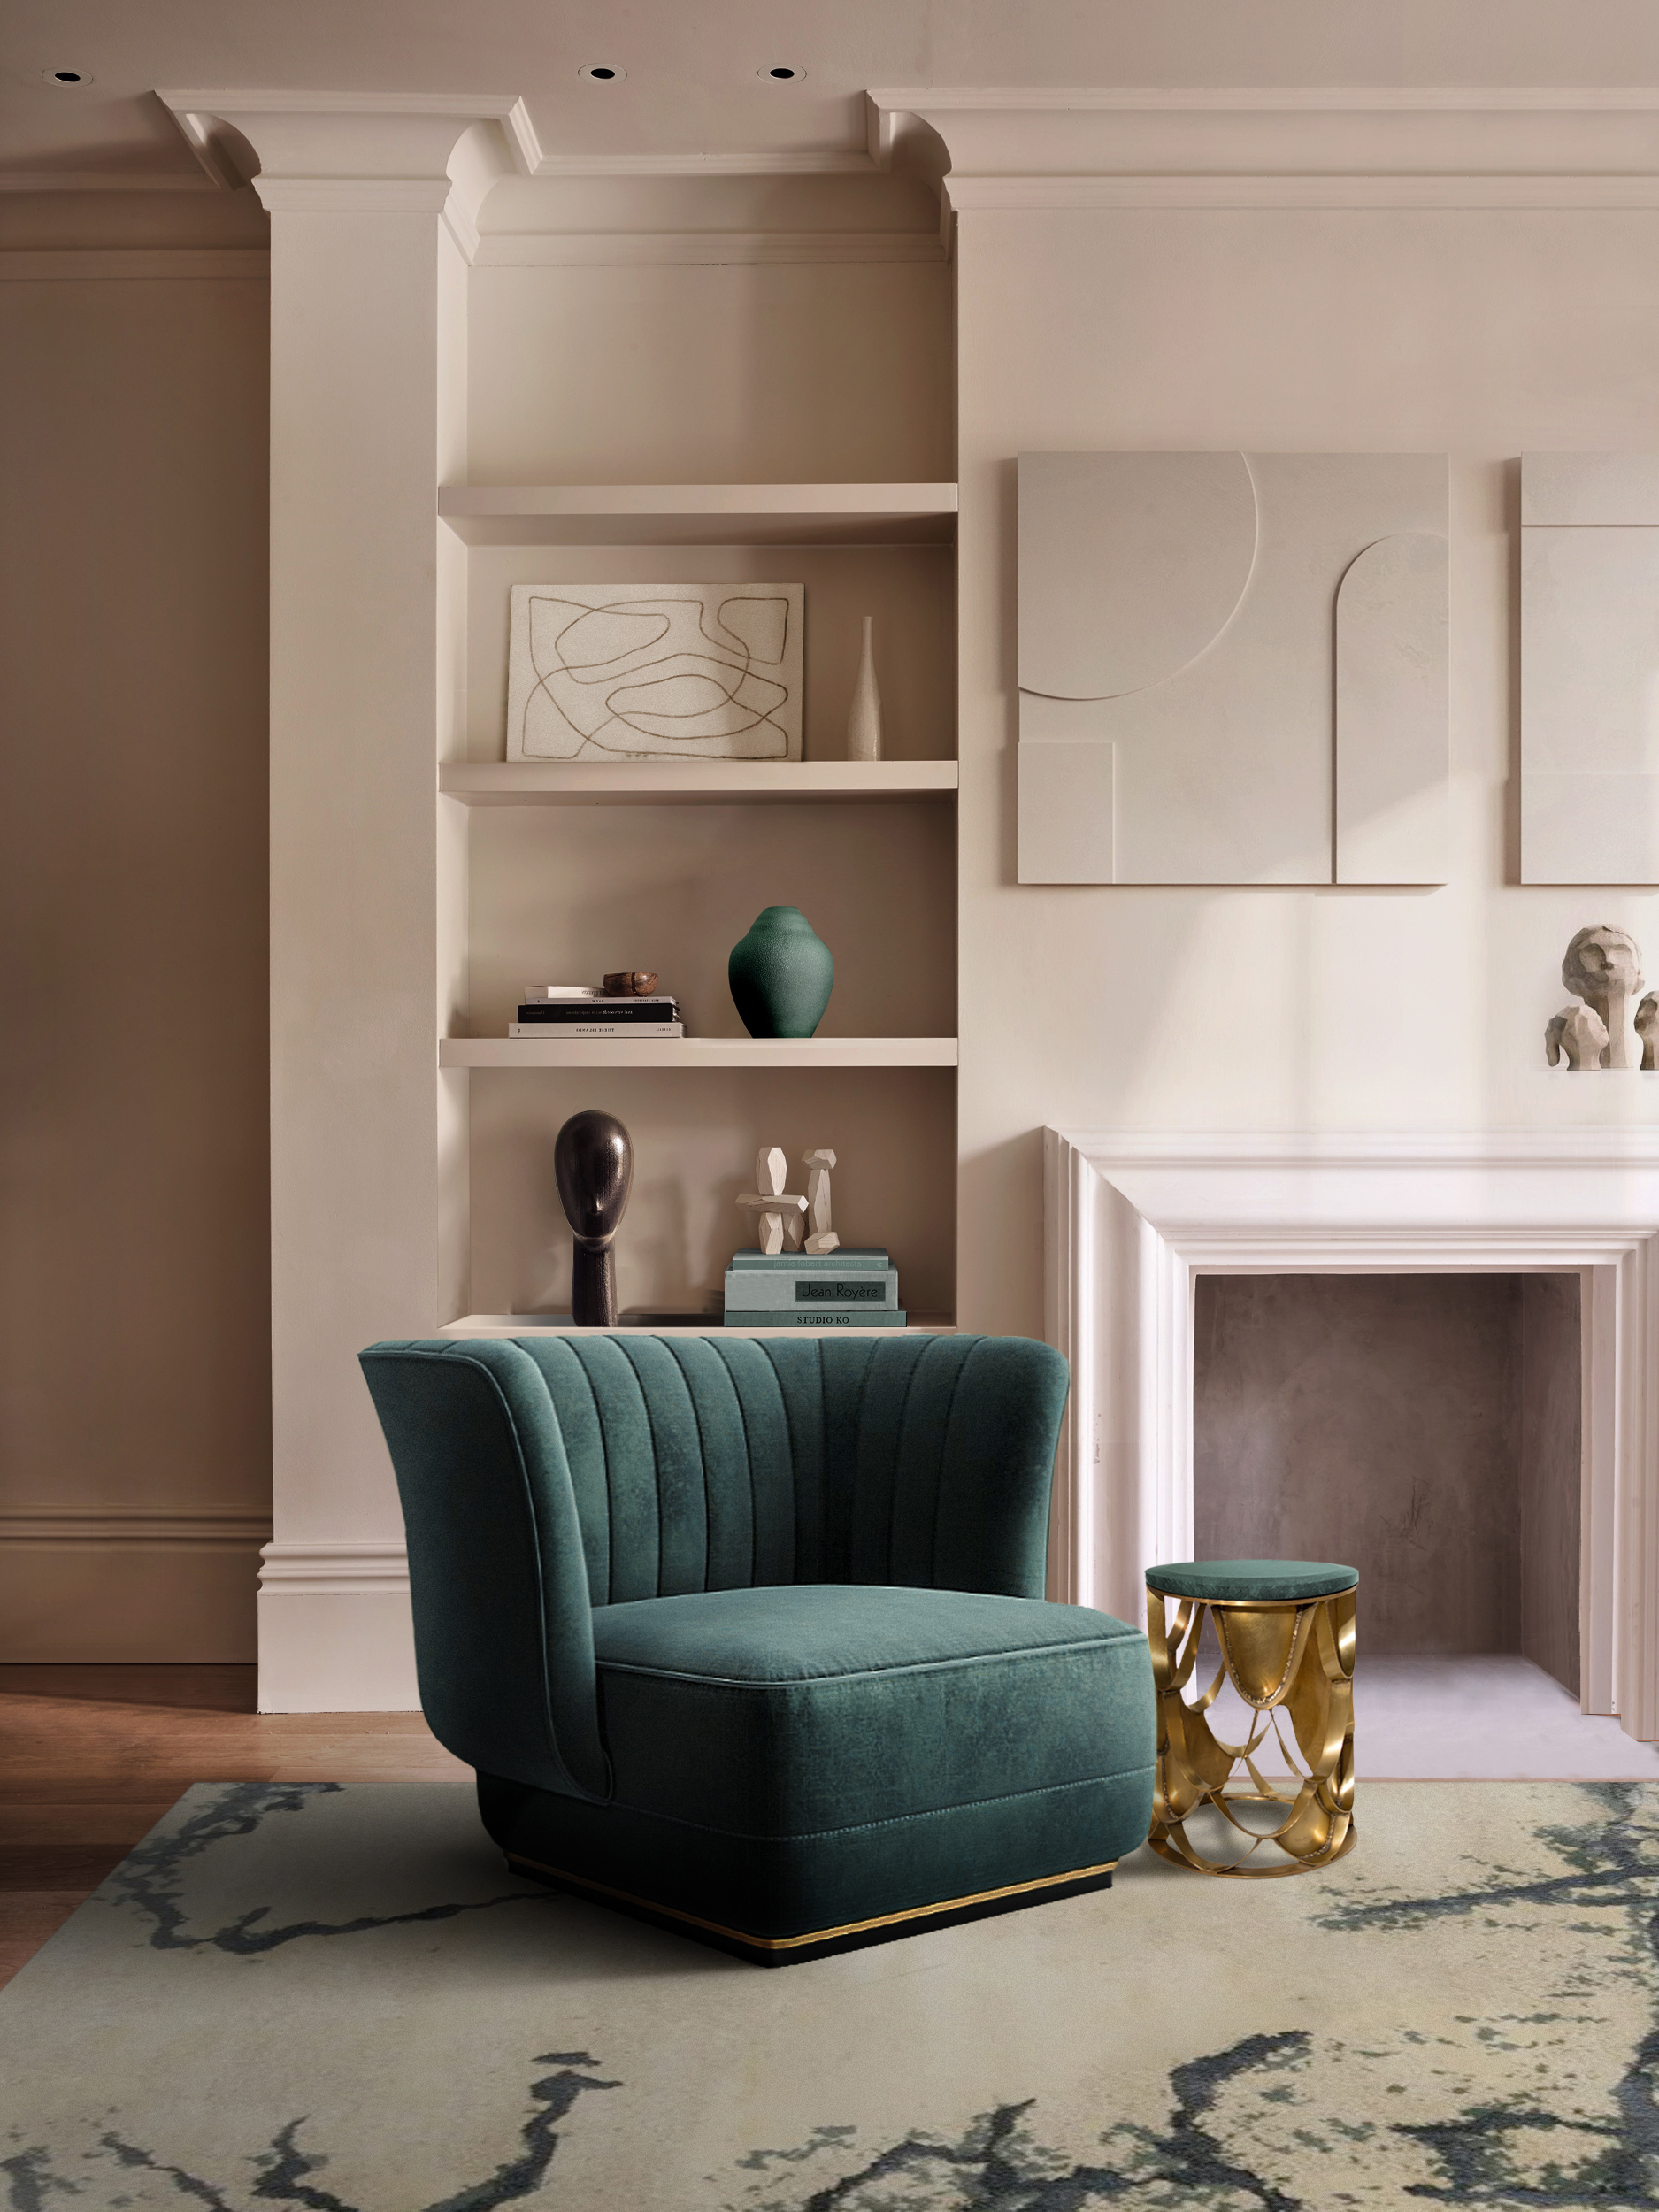 Contemporary living room corner with the Elk Armchair - Contemporary Living Room Decor: Create Unique Interior Designs  home inspiration ideas